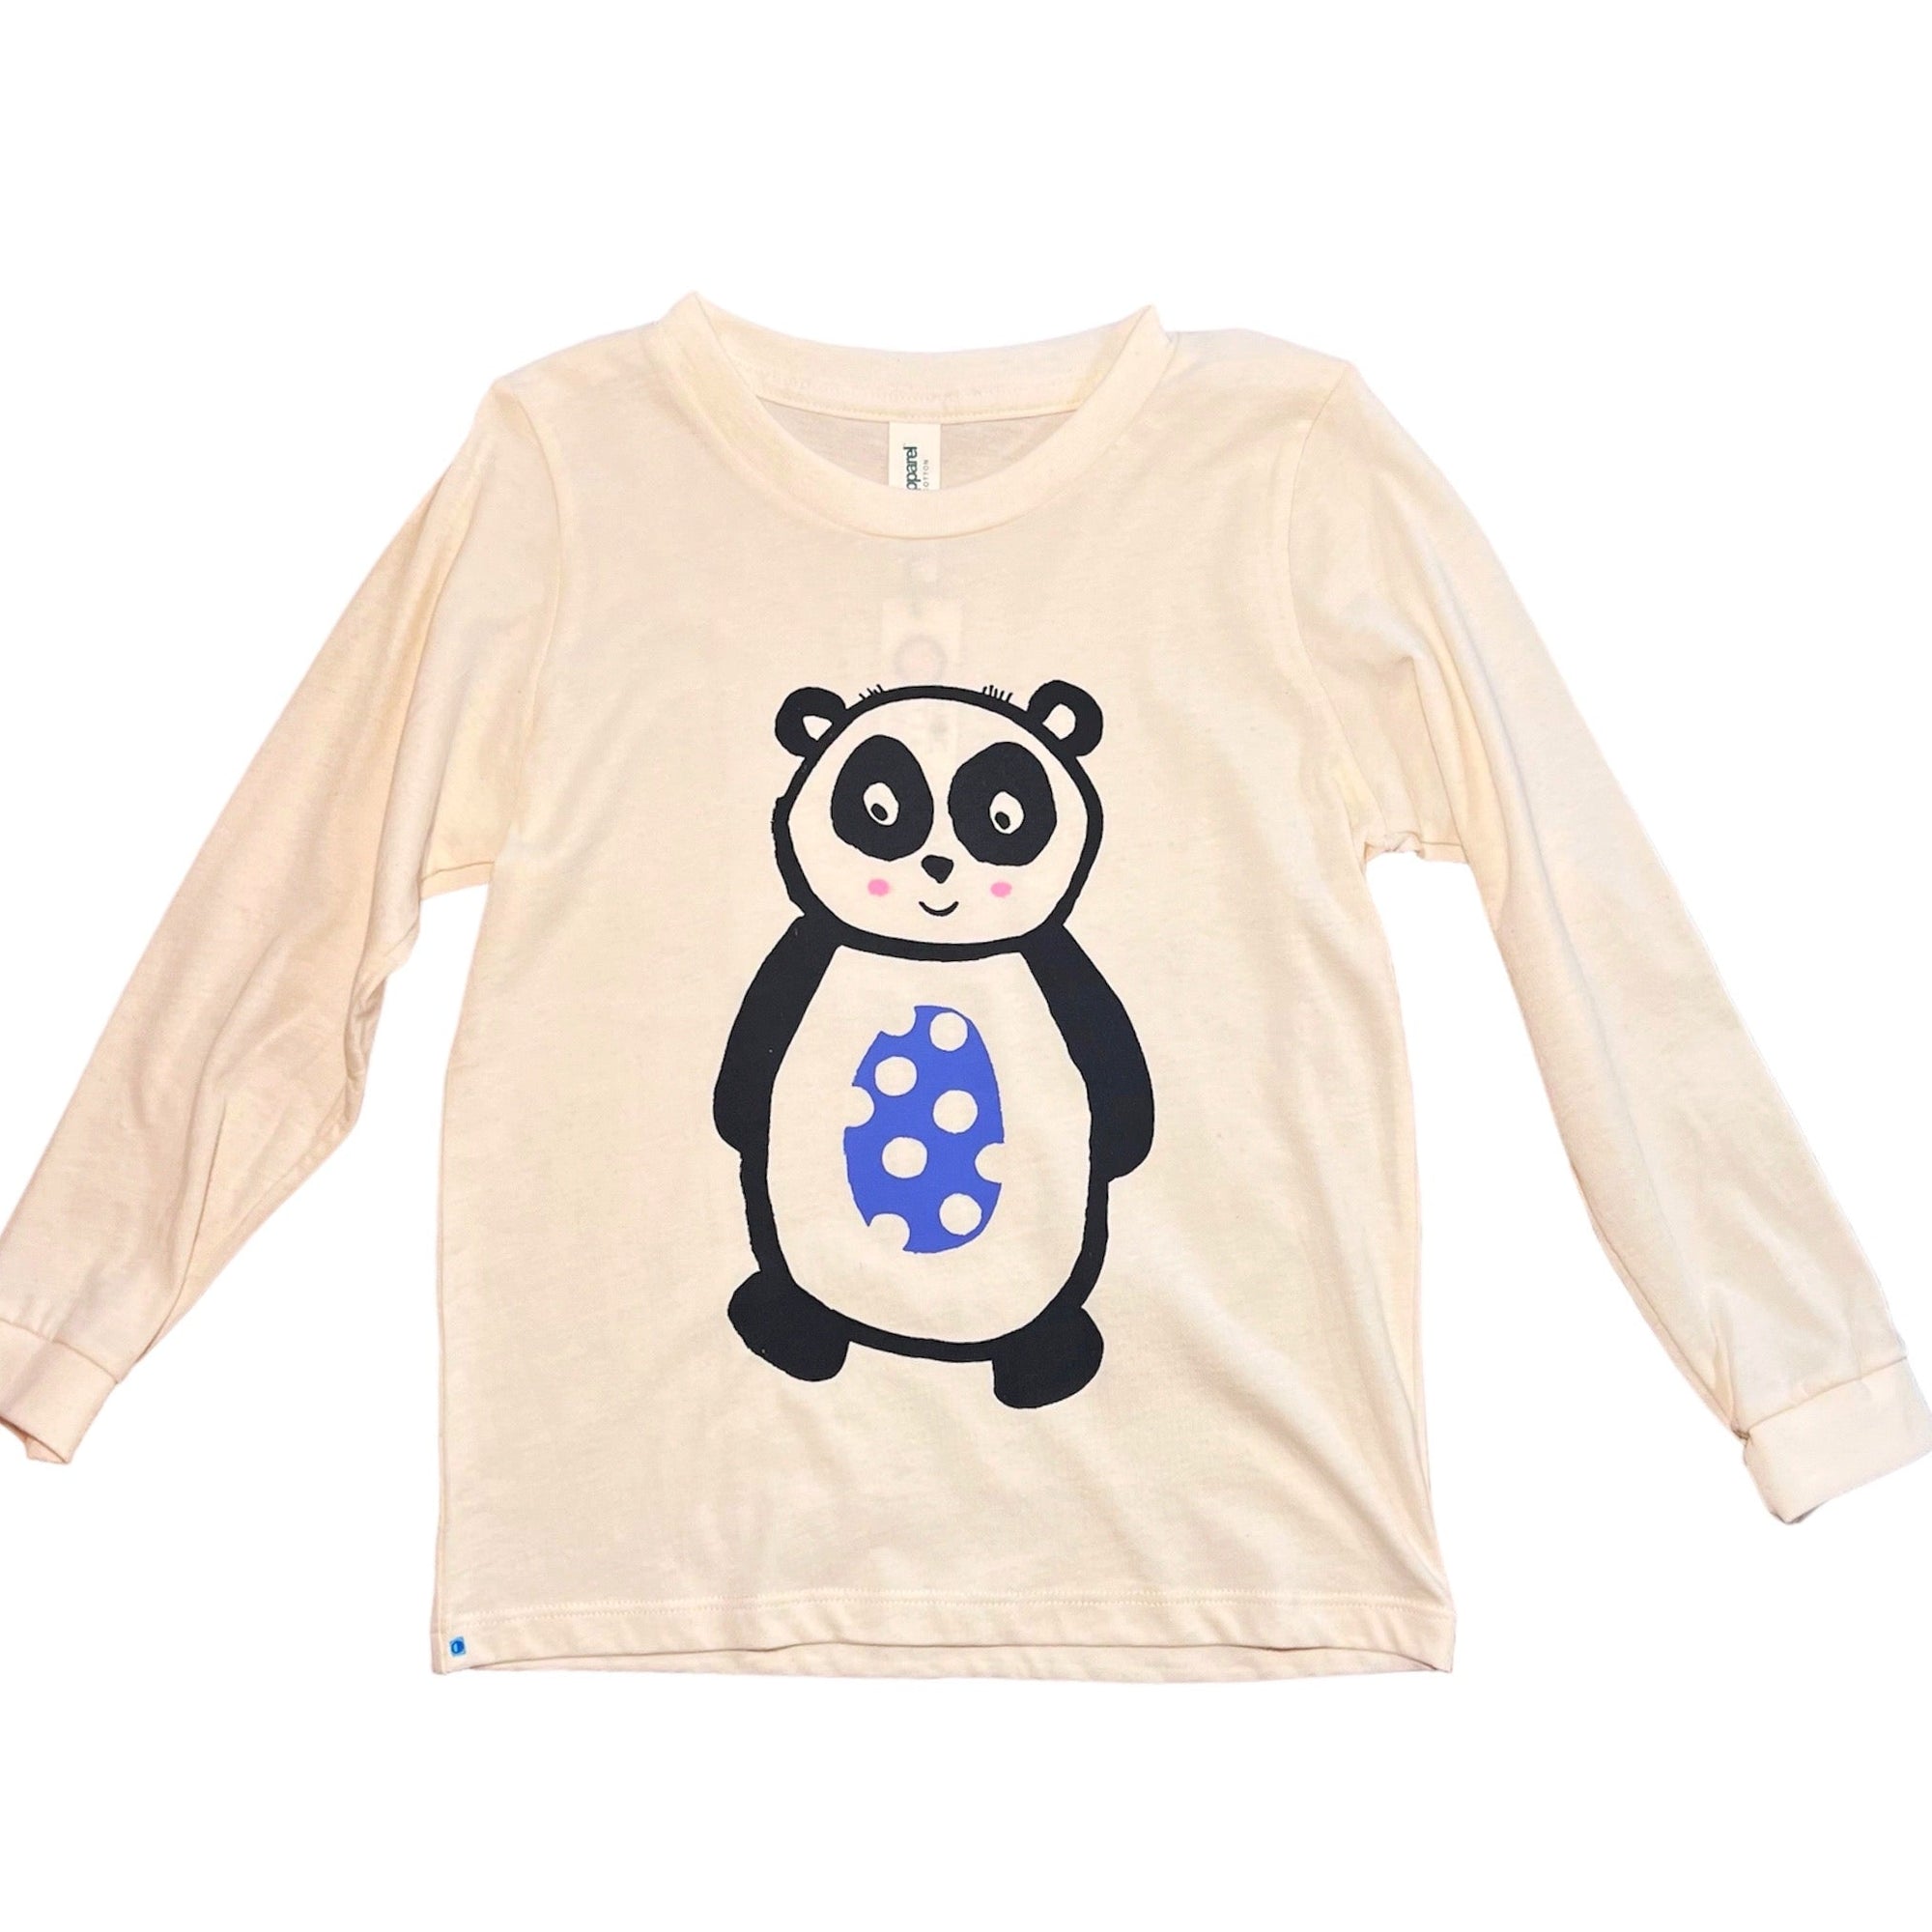 Kids Shirt - Panda - Long Sleeve - Cream - Gift & Gather